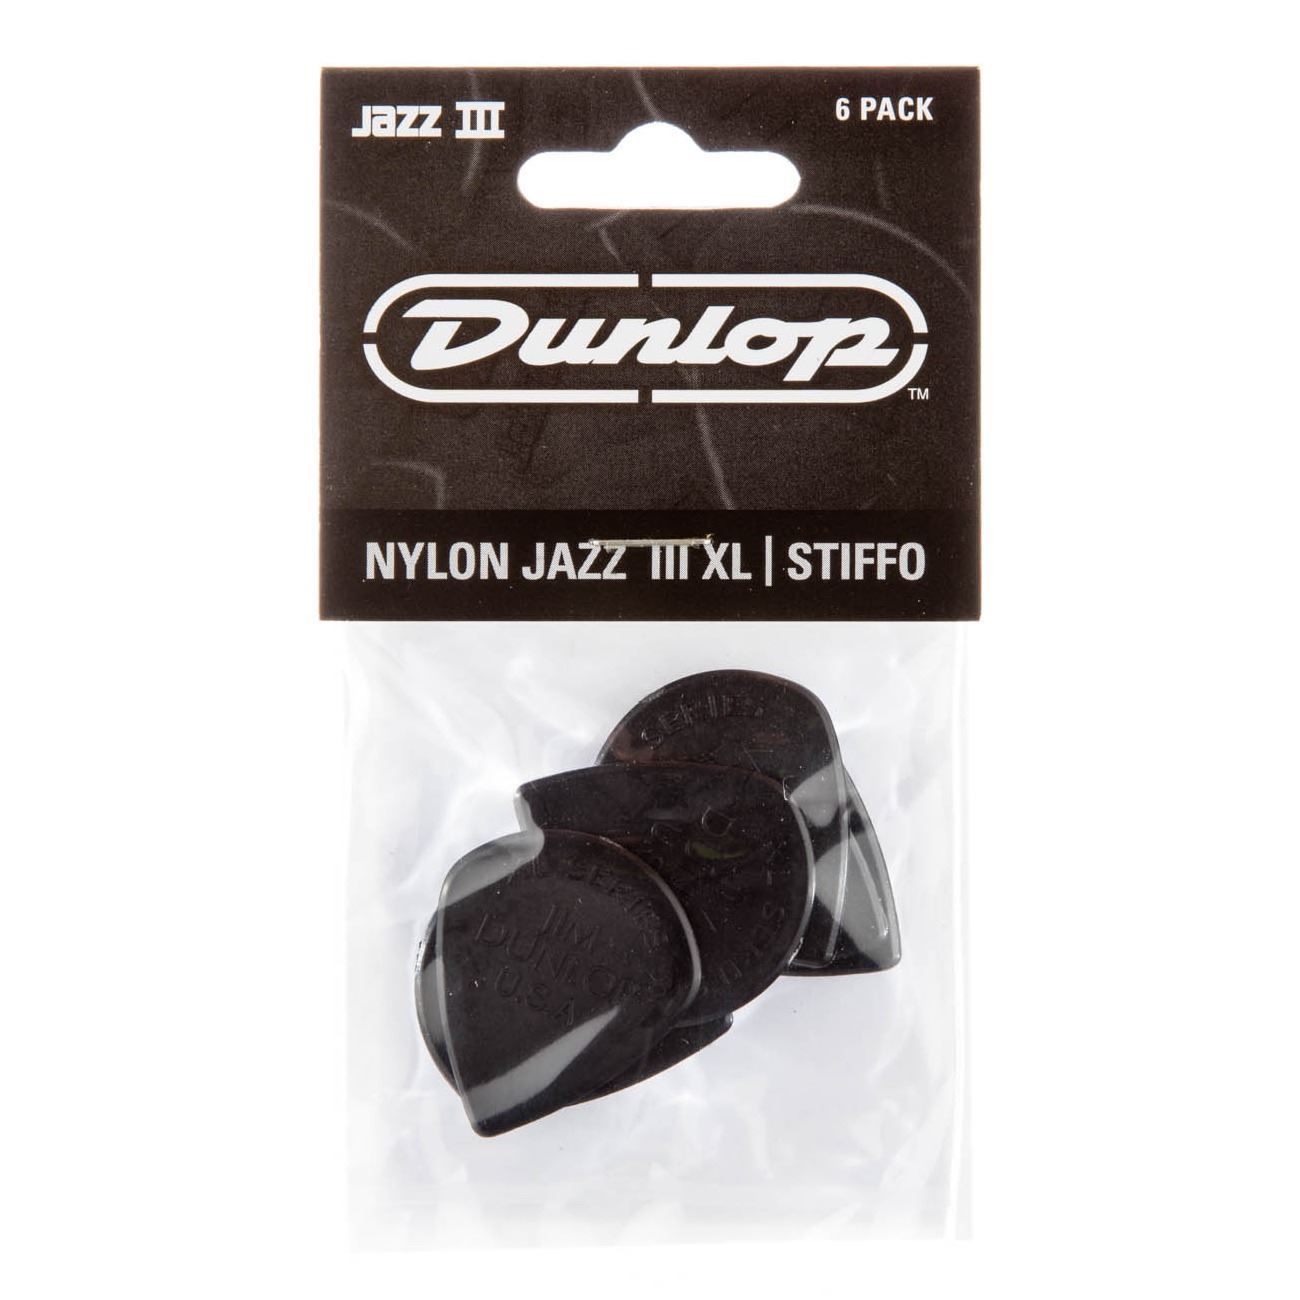 Jim Dunlop JP5XLS Jazz III XL Players Pack Black Nylon Stiffo